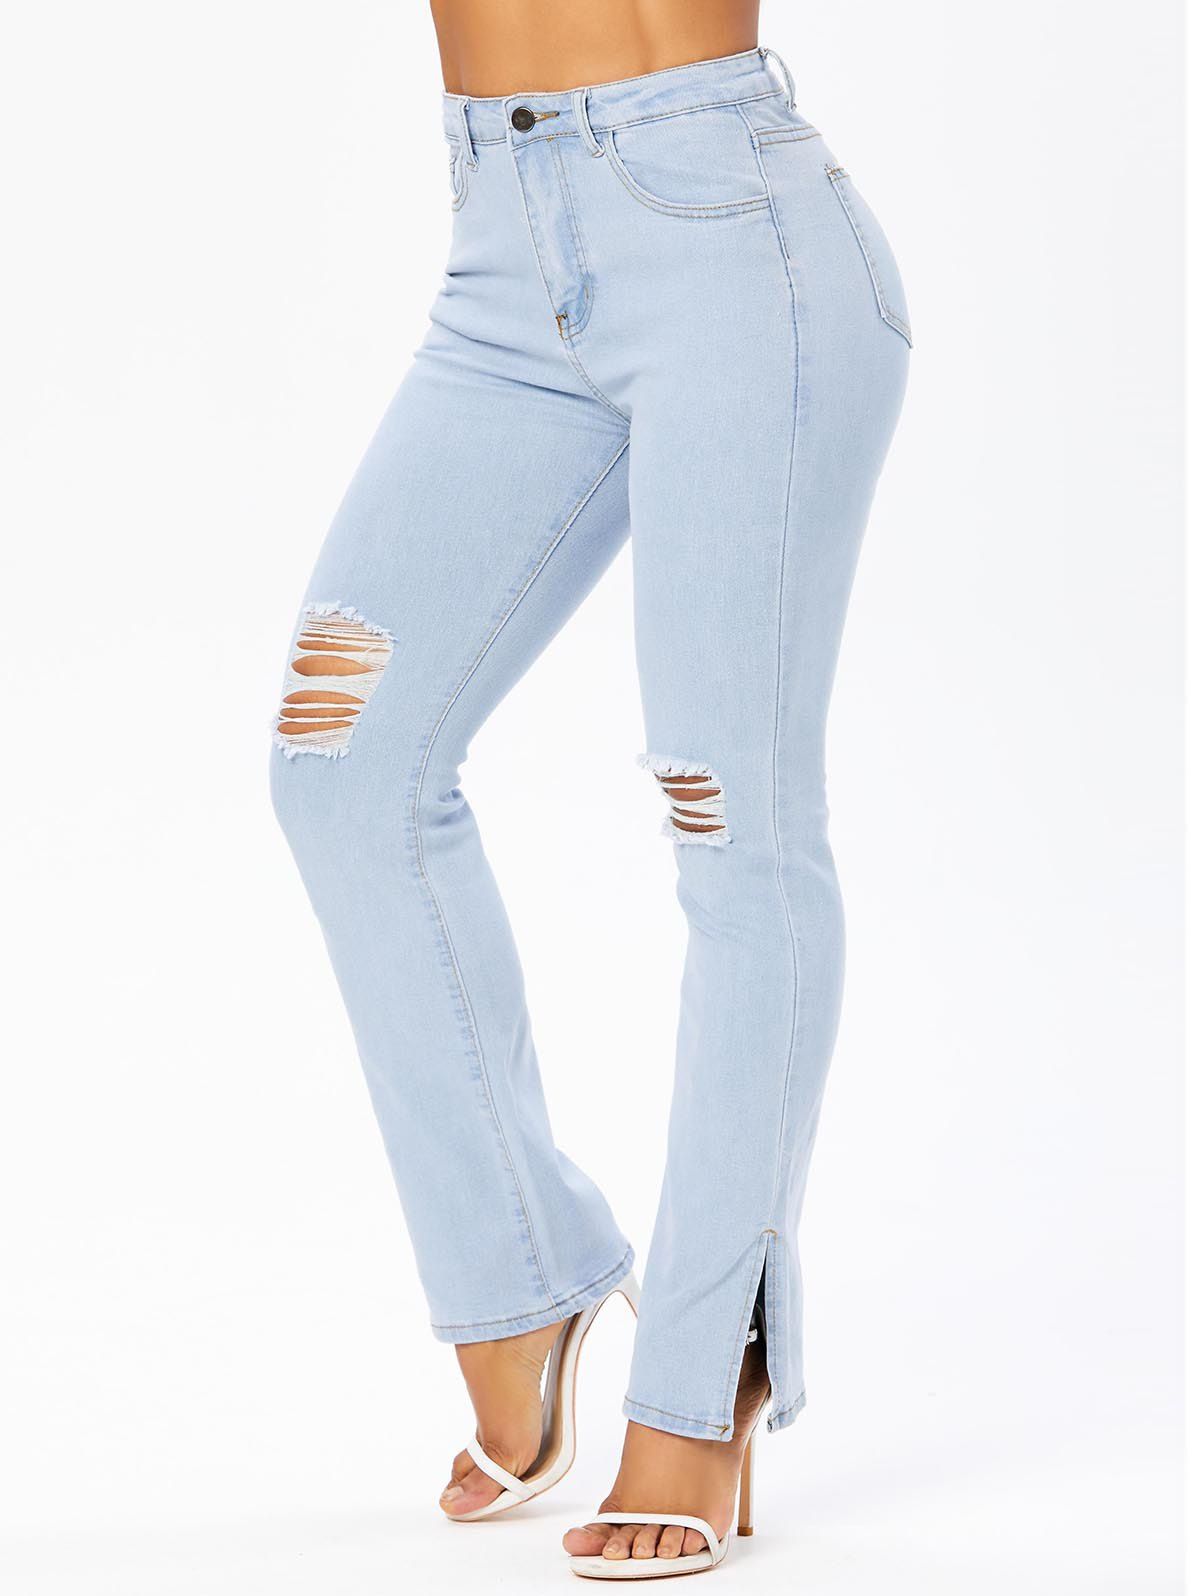 Ripped Jeans Light Wash Pockets Solid Color Slit Zipper Fly Trendy Long Denim Pants - LIGHT BLUE M